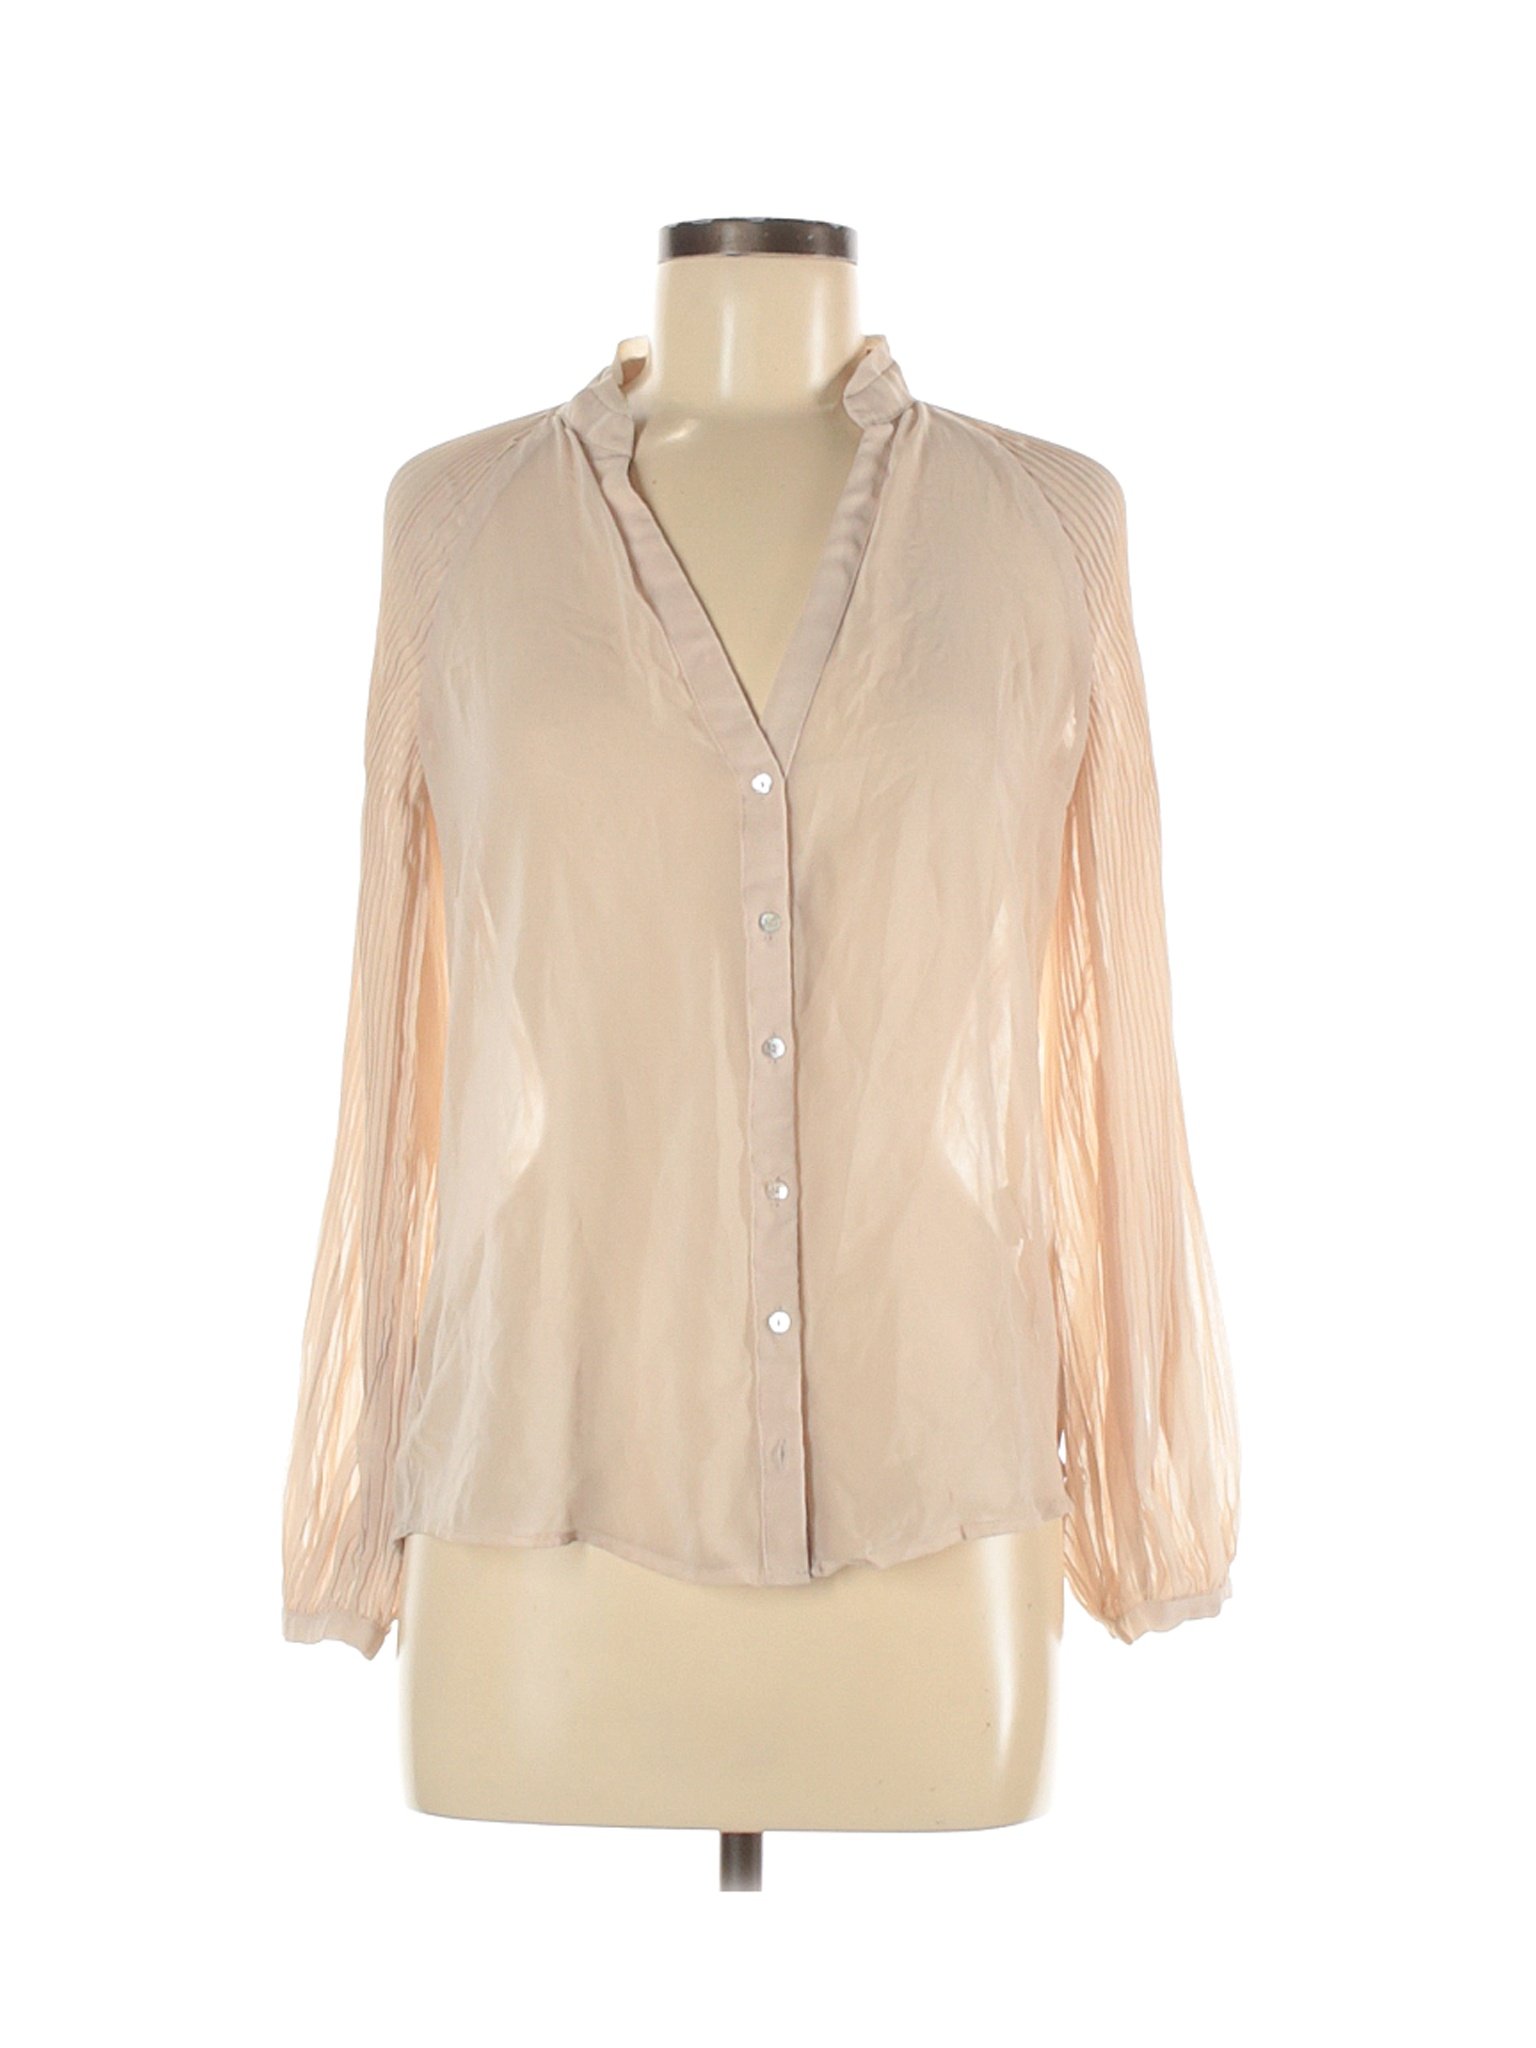 Zara Women Brown Long Sleeve Blouse XS | eBay